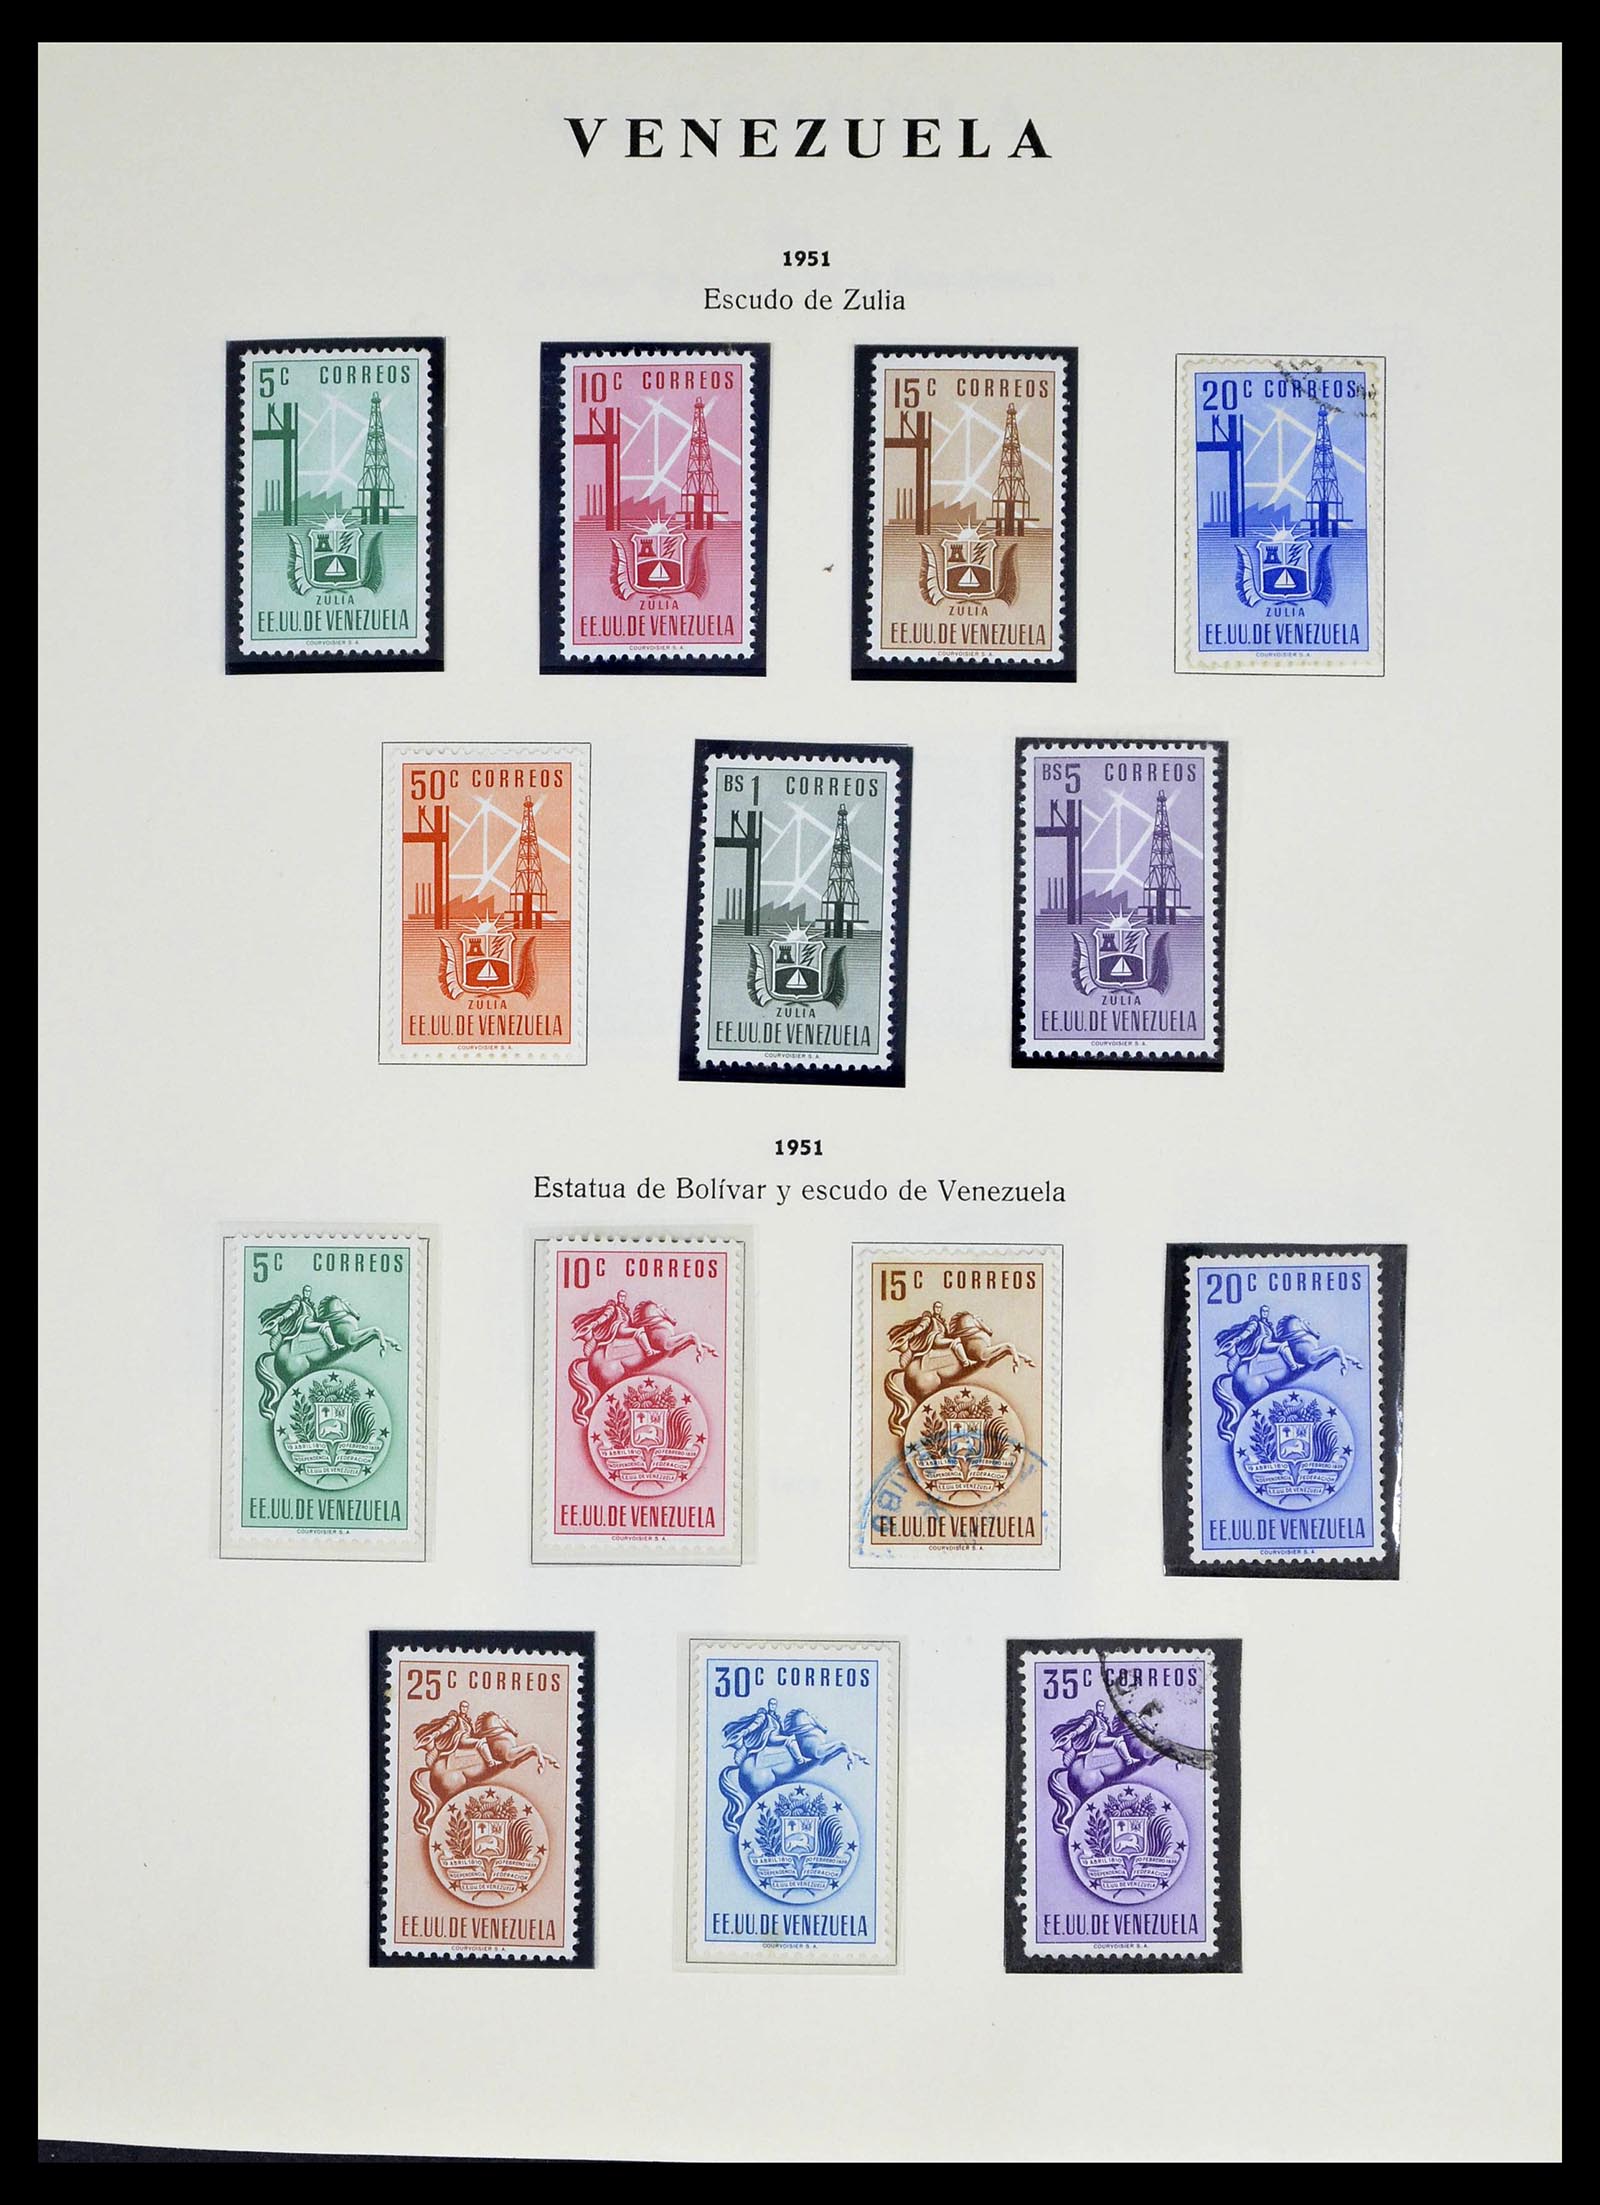 39223 0025 - Stamp collection 39223 Venezuela 1859-1984.